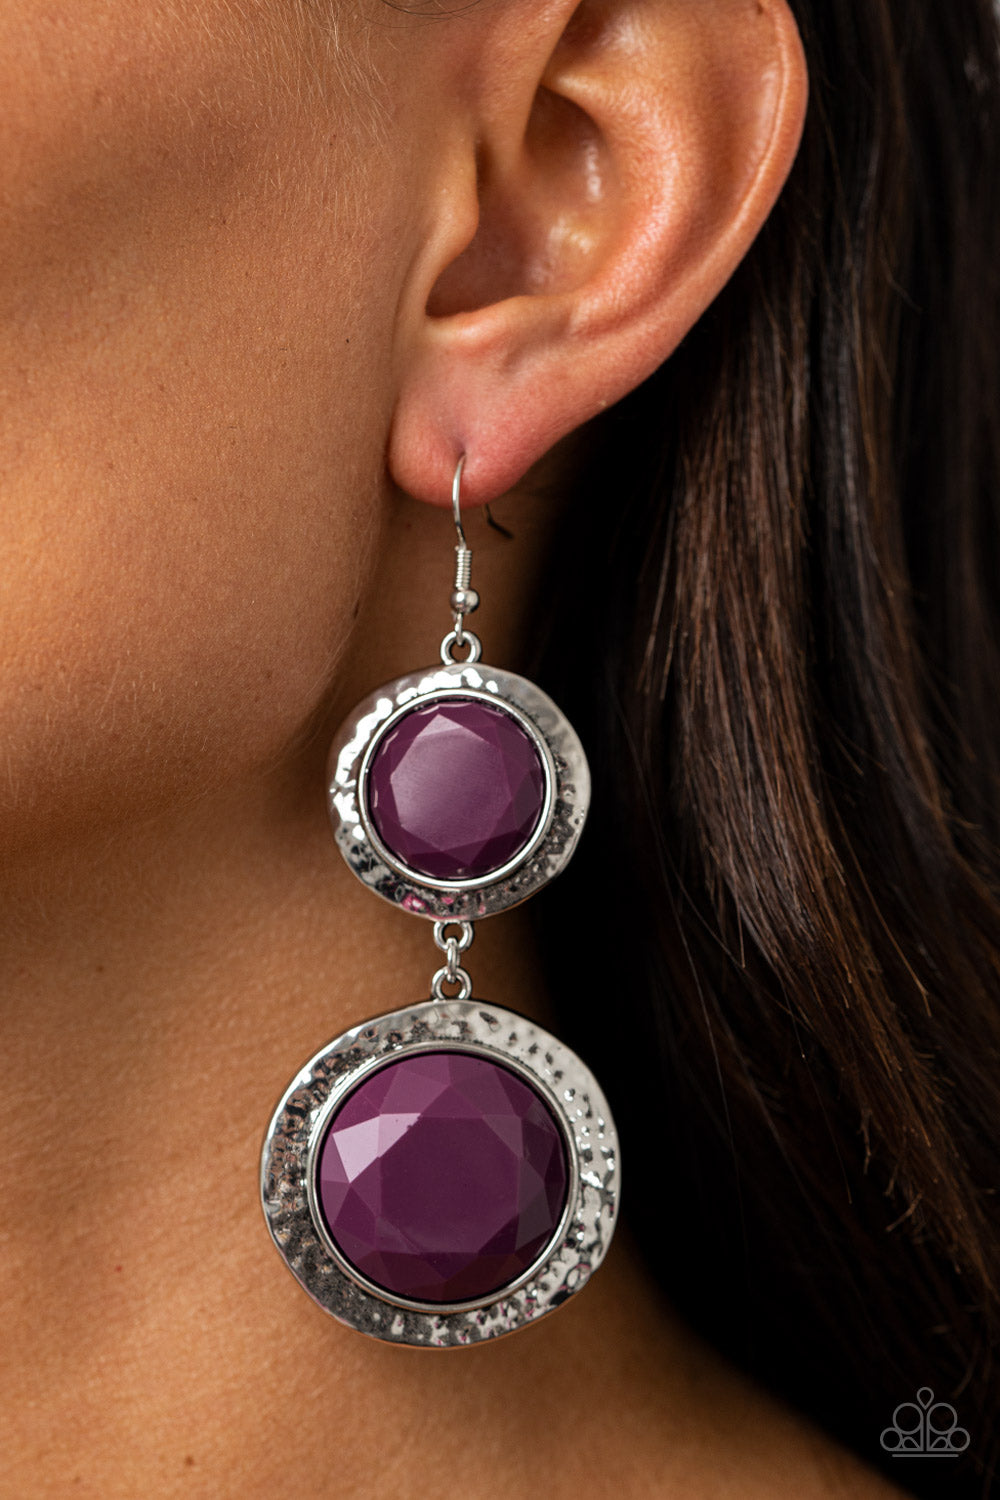 Thrift Shop Stop - Purple Earrings - Princess Glam Shop